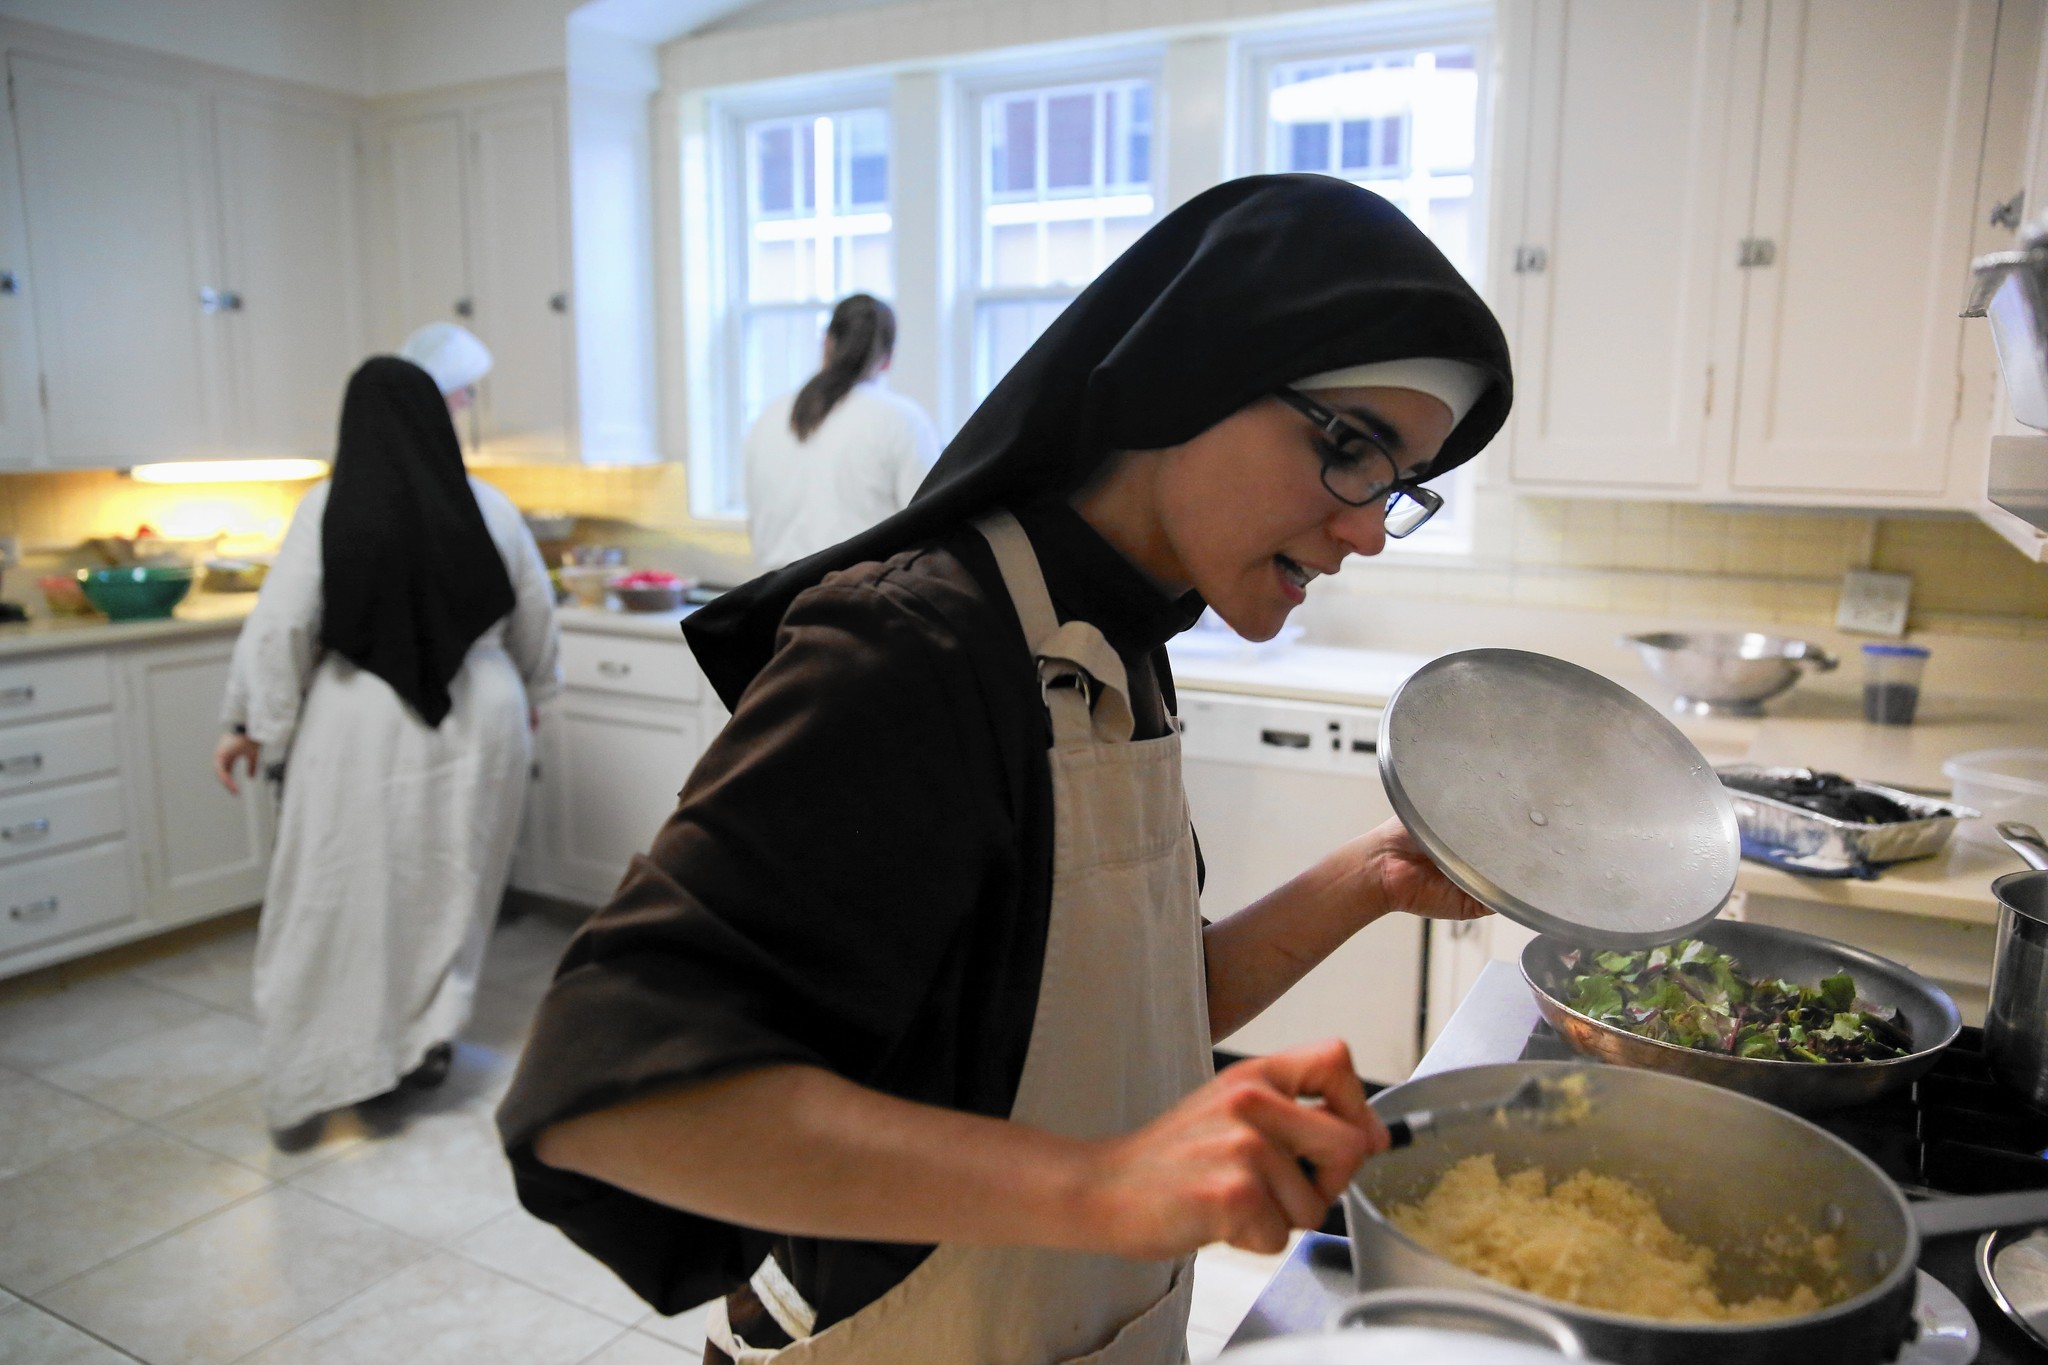 Catholic sister competes on Food Network's 'Chopped' - Chicago Tribune2048 x 1365